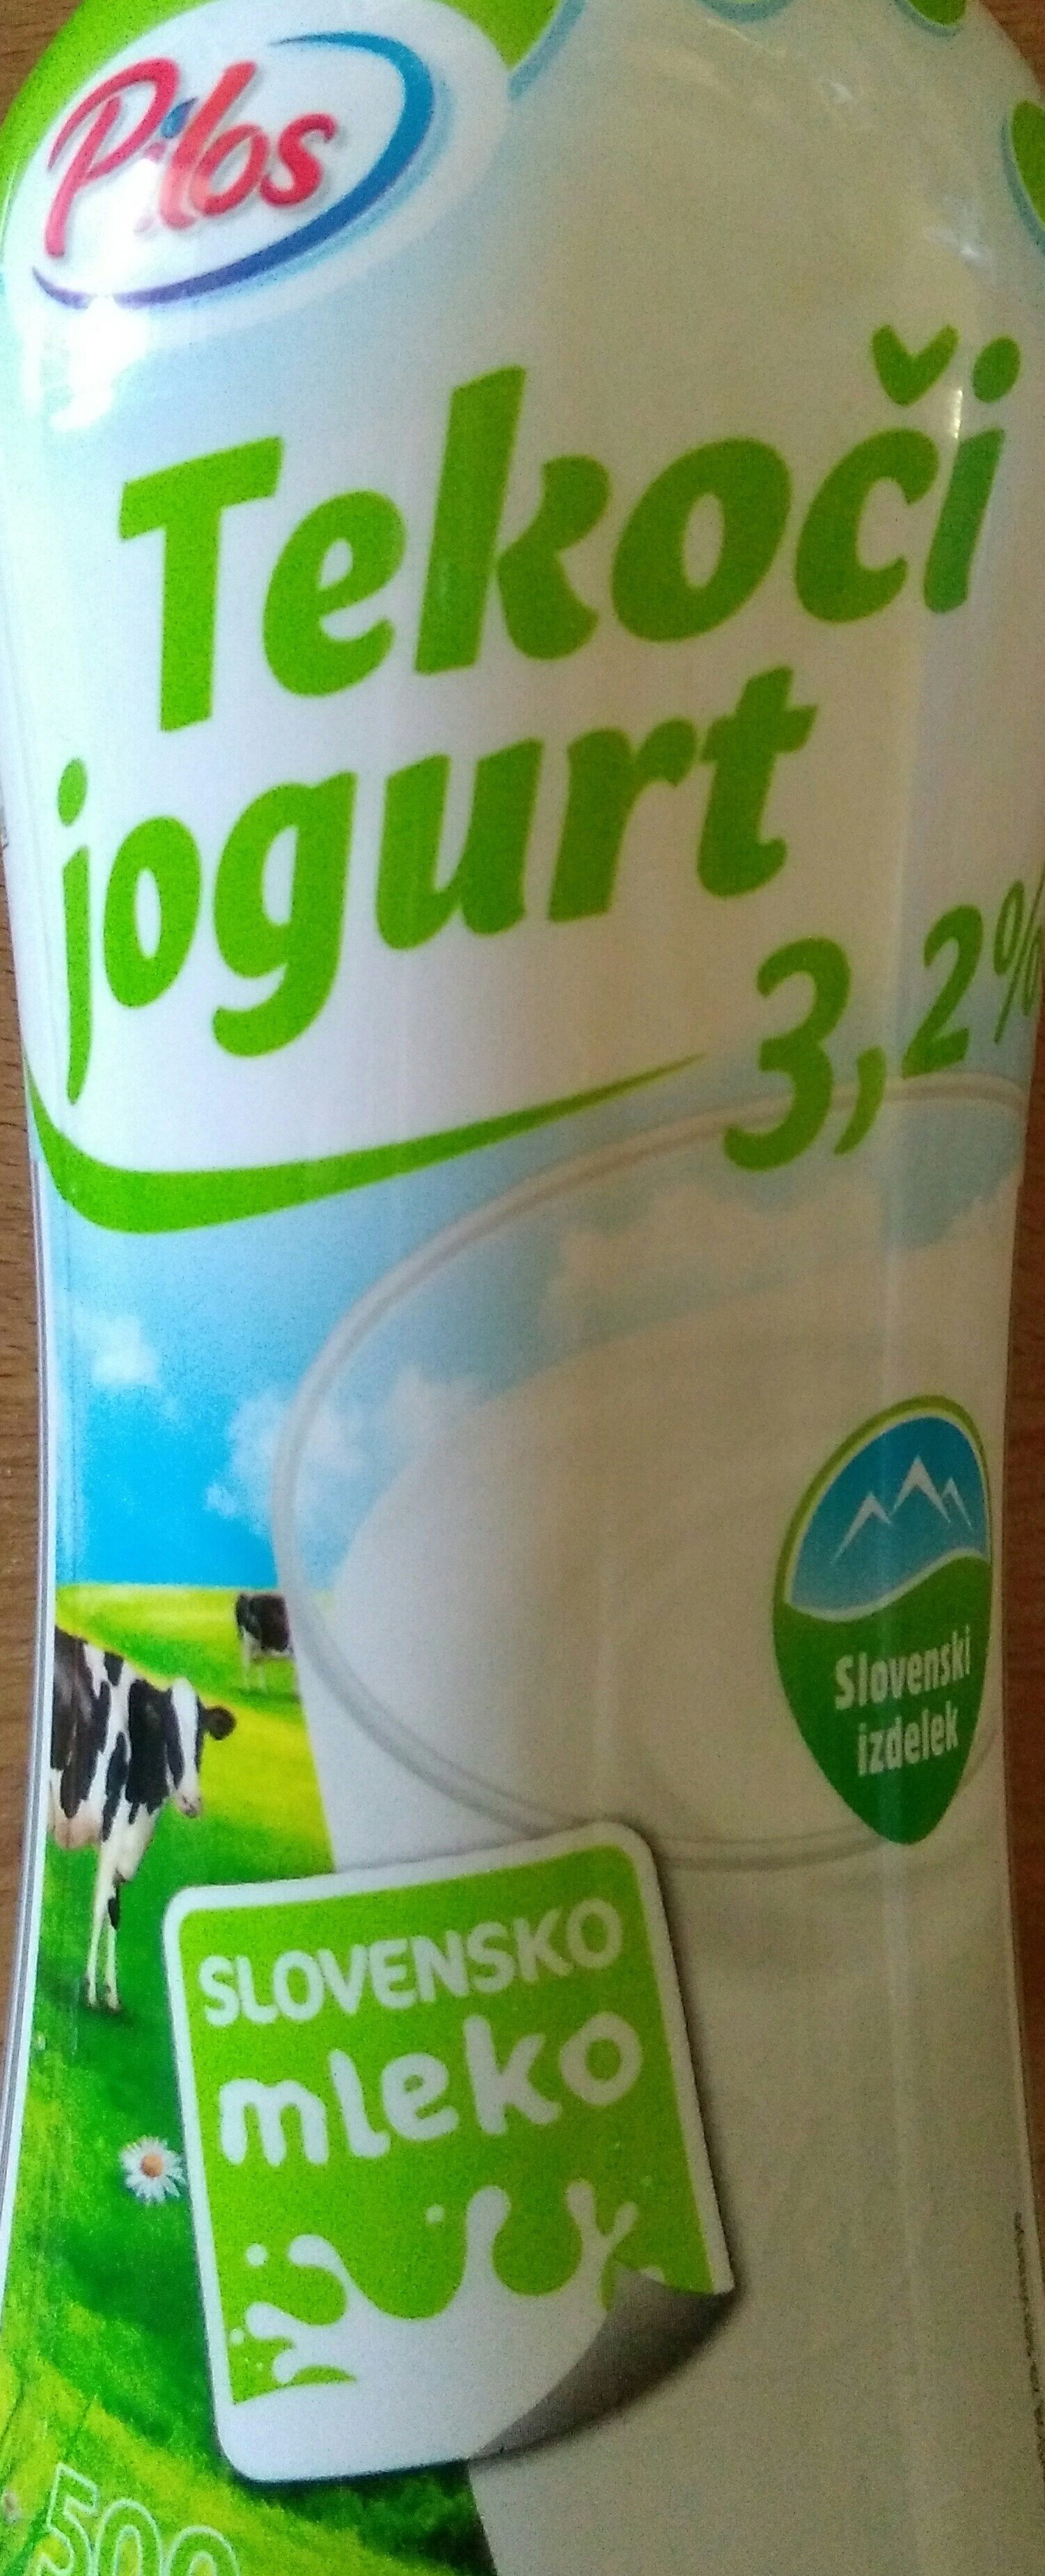 Tekoči jogurt 3.2% - Product - sl